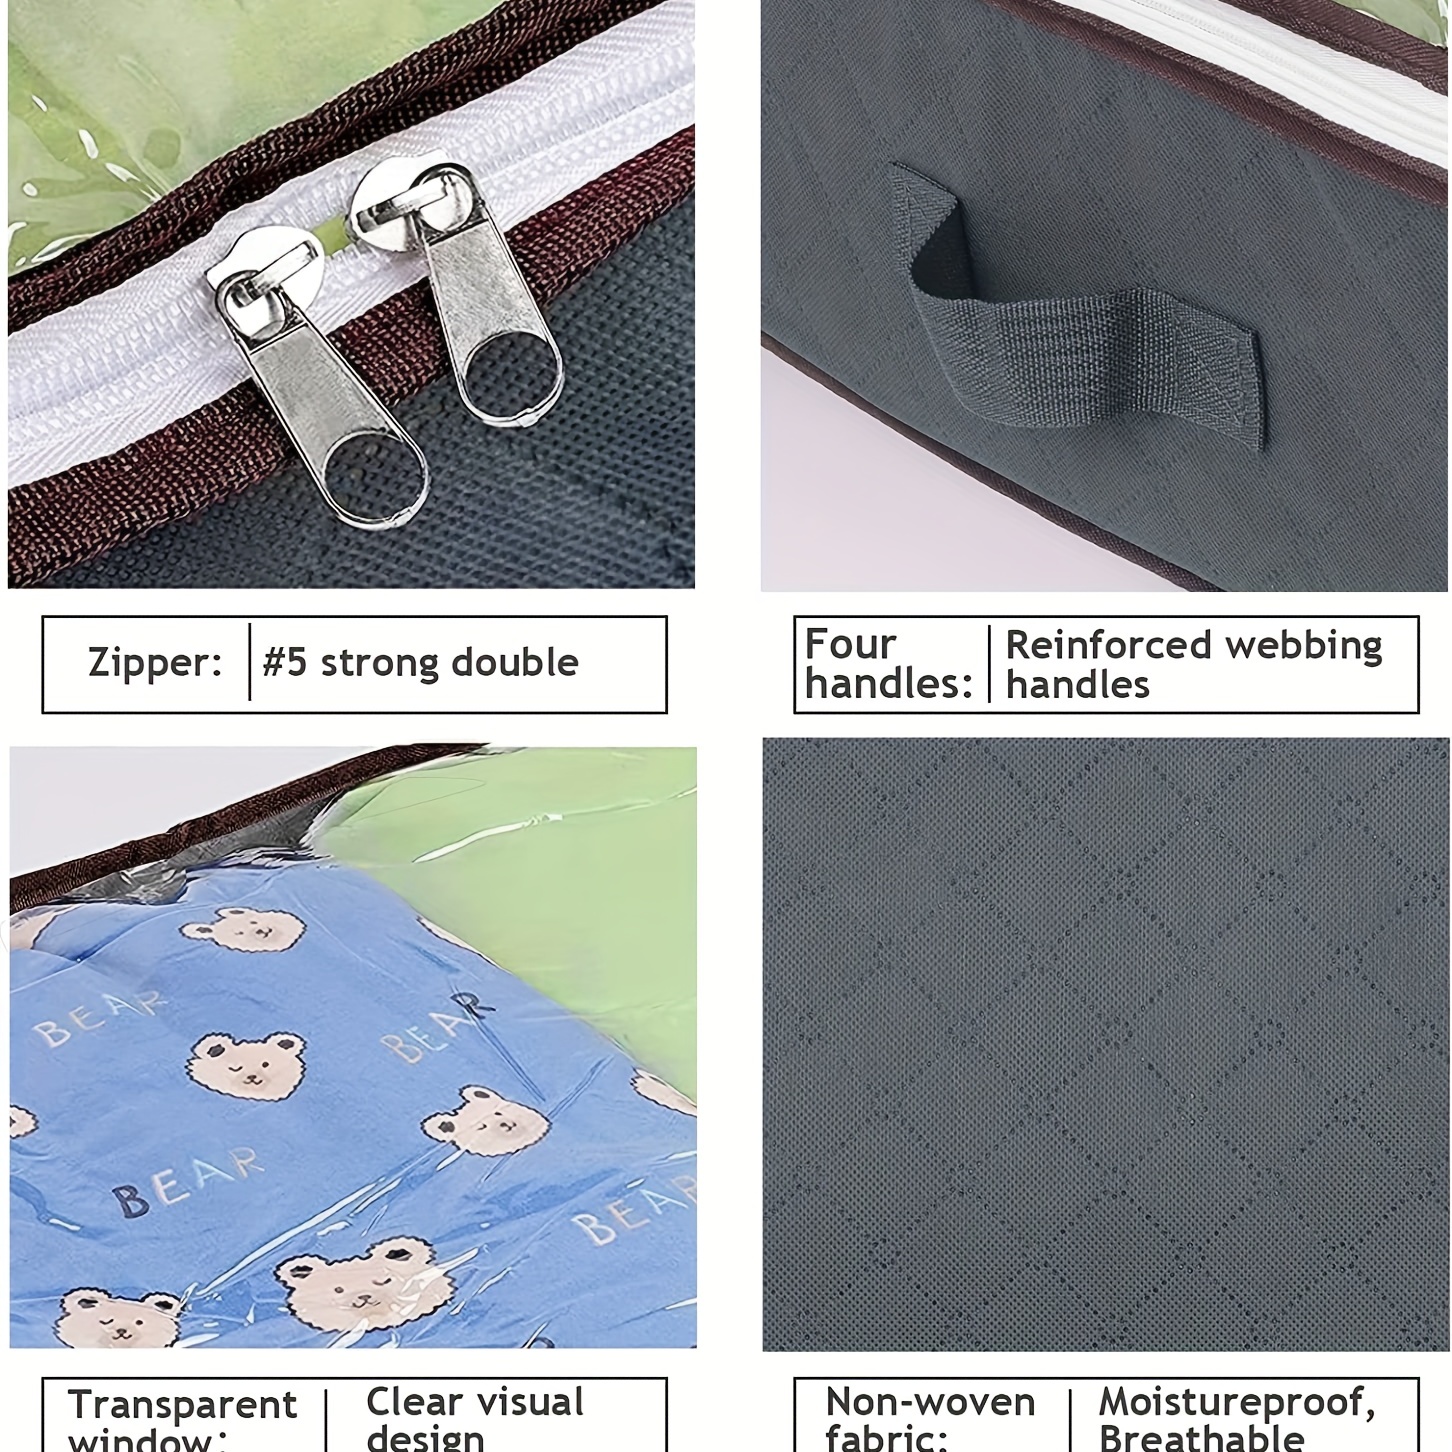 Under Bed Duvet Storage Bag Grey Breathable Material Organiser